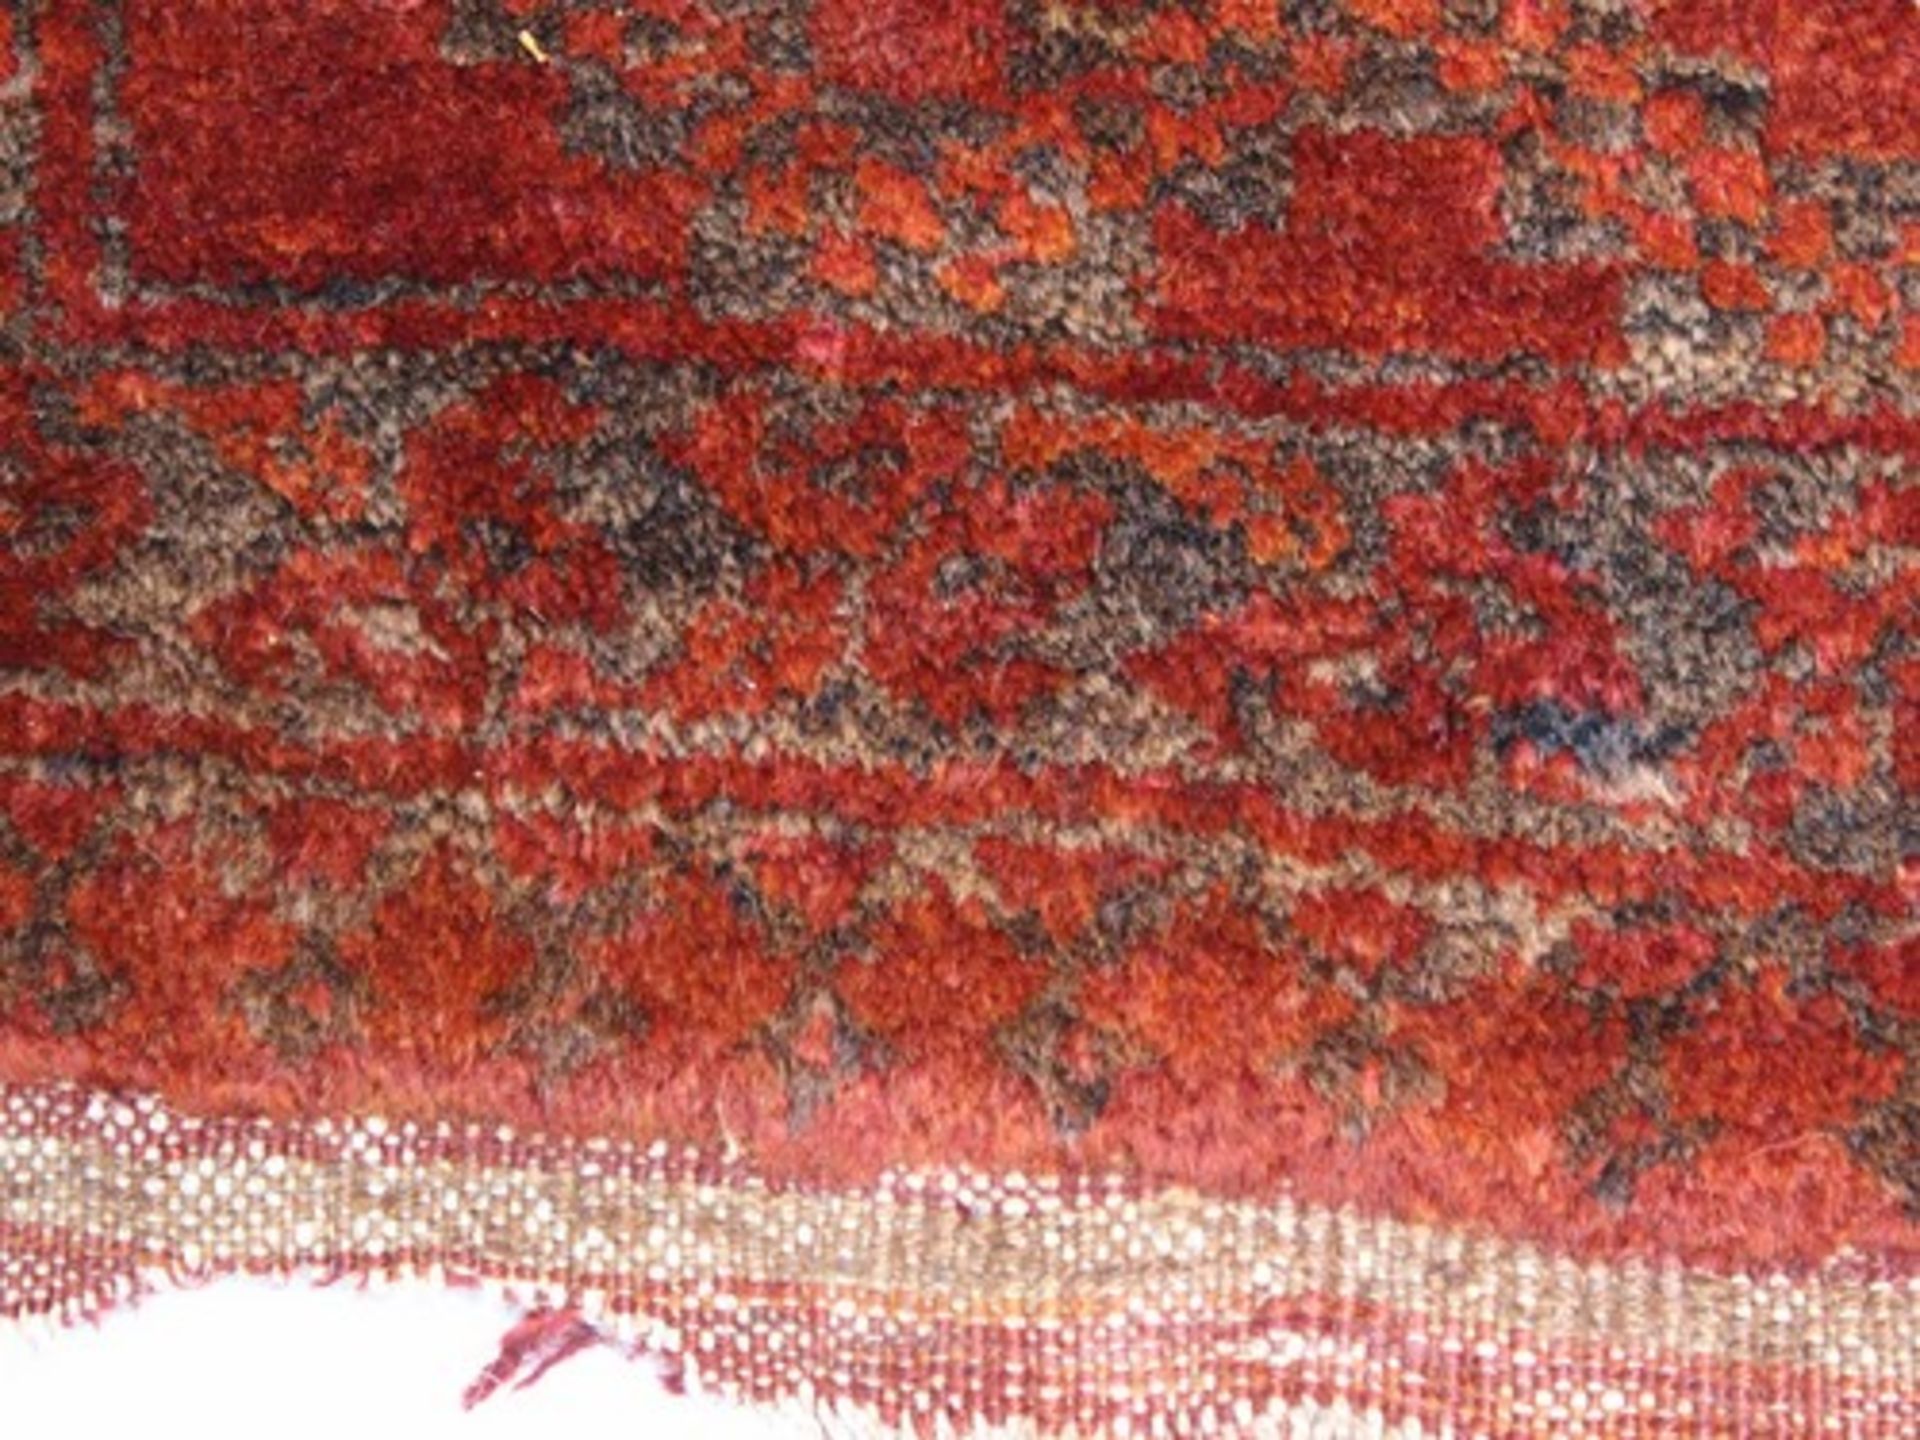 OrientteppichAfghanistan, Wolle/Wolle, hoher Flor, rot/gold, schwarz, mehrfach Bordüre, im Feld 2 - Image 6 of 8